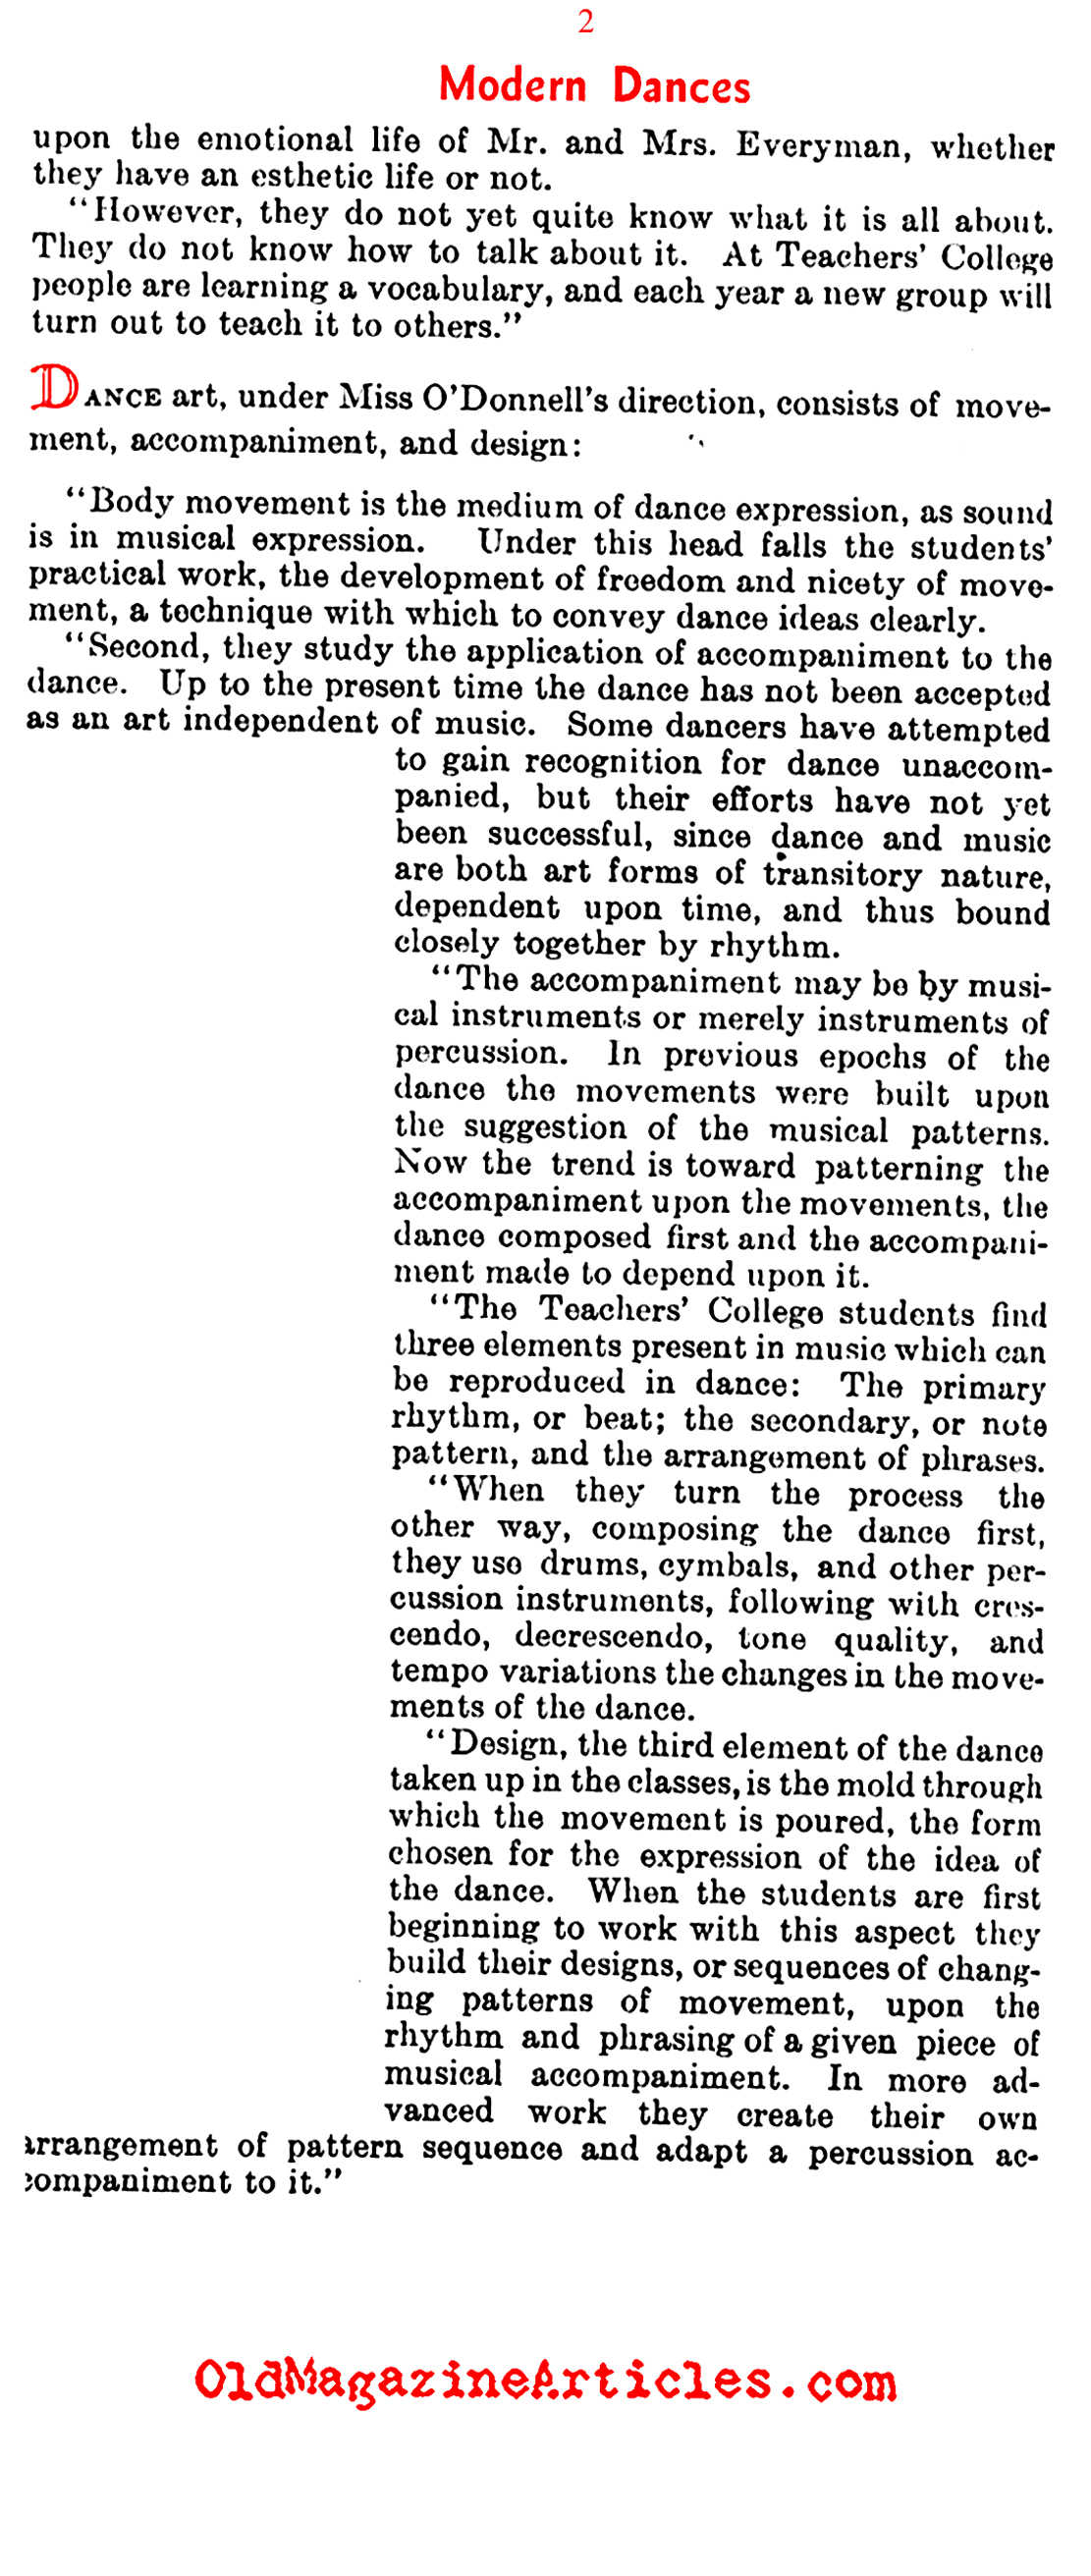 Modern Dance: Spreading the News (Literary Digest, 1933)